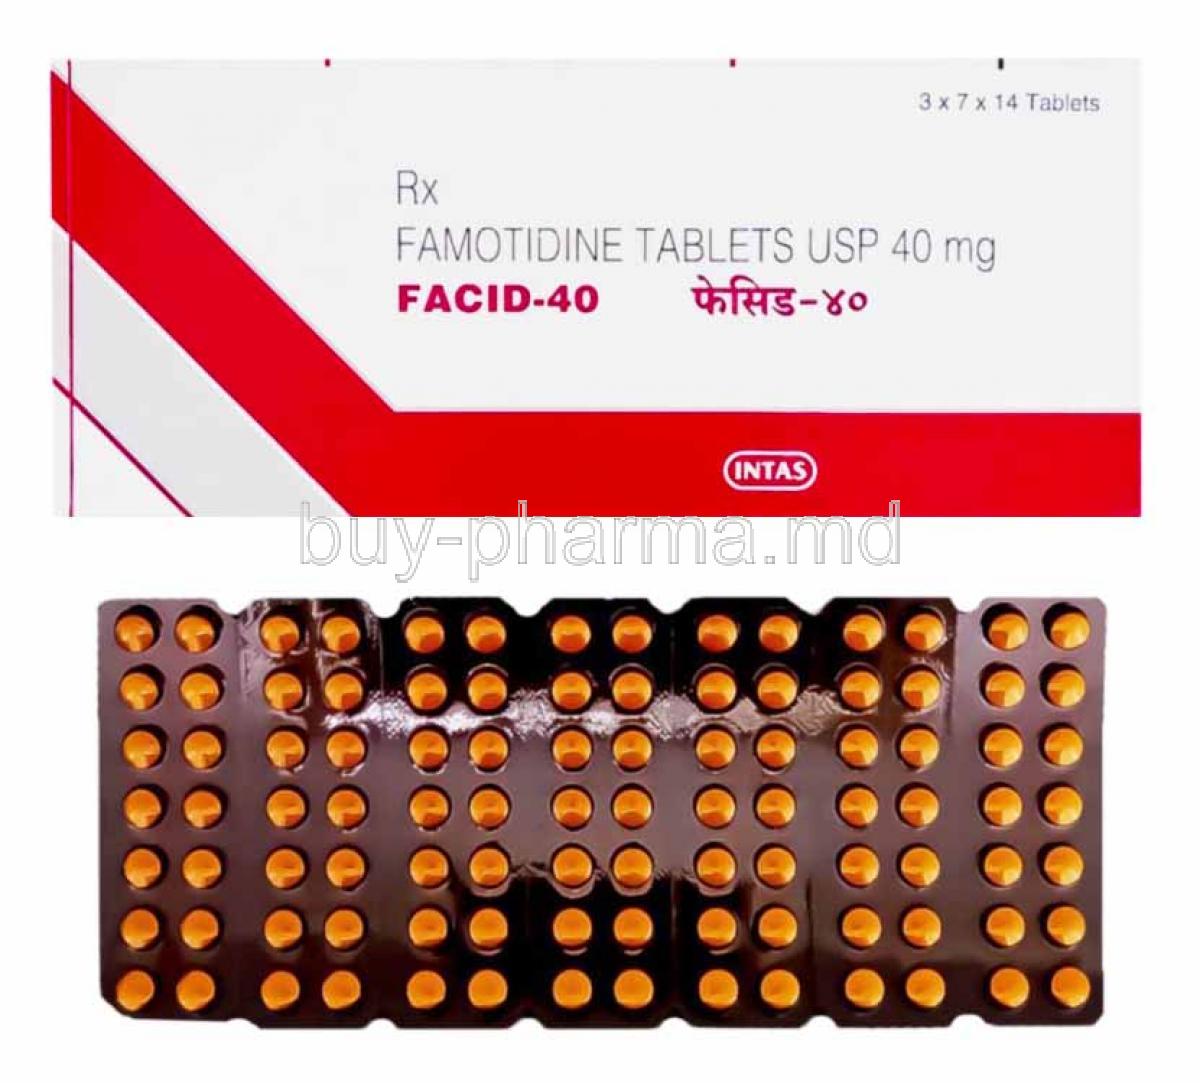 Facid, Famotidine 40mg box and tablets